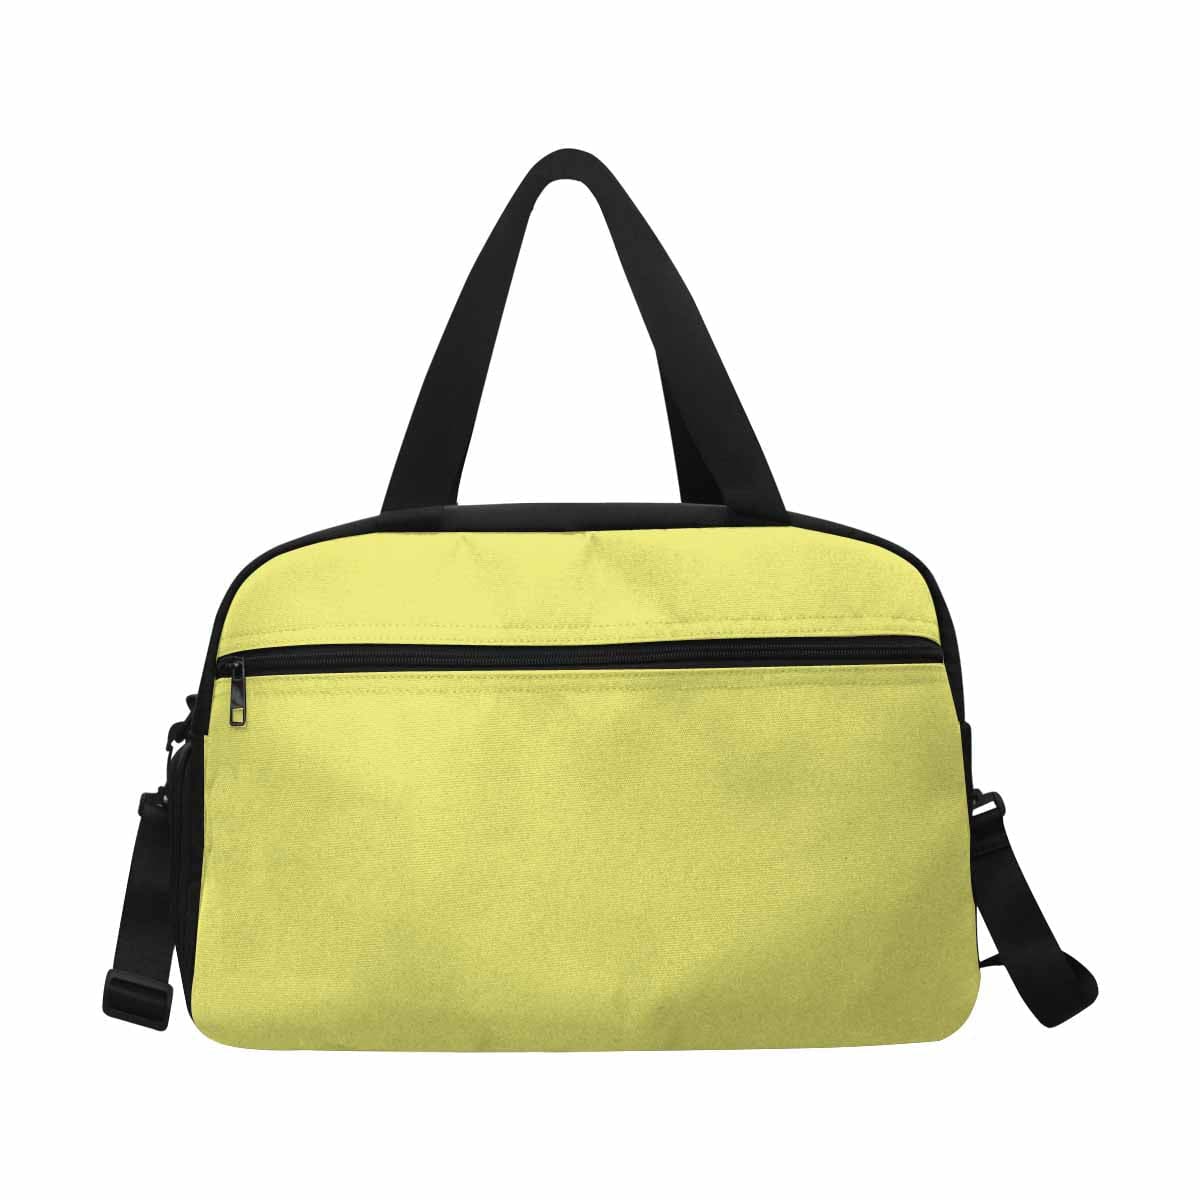 Honeysuckle Yellow Tote And Crossbody Travel Bag - Bags | Travel Bags |